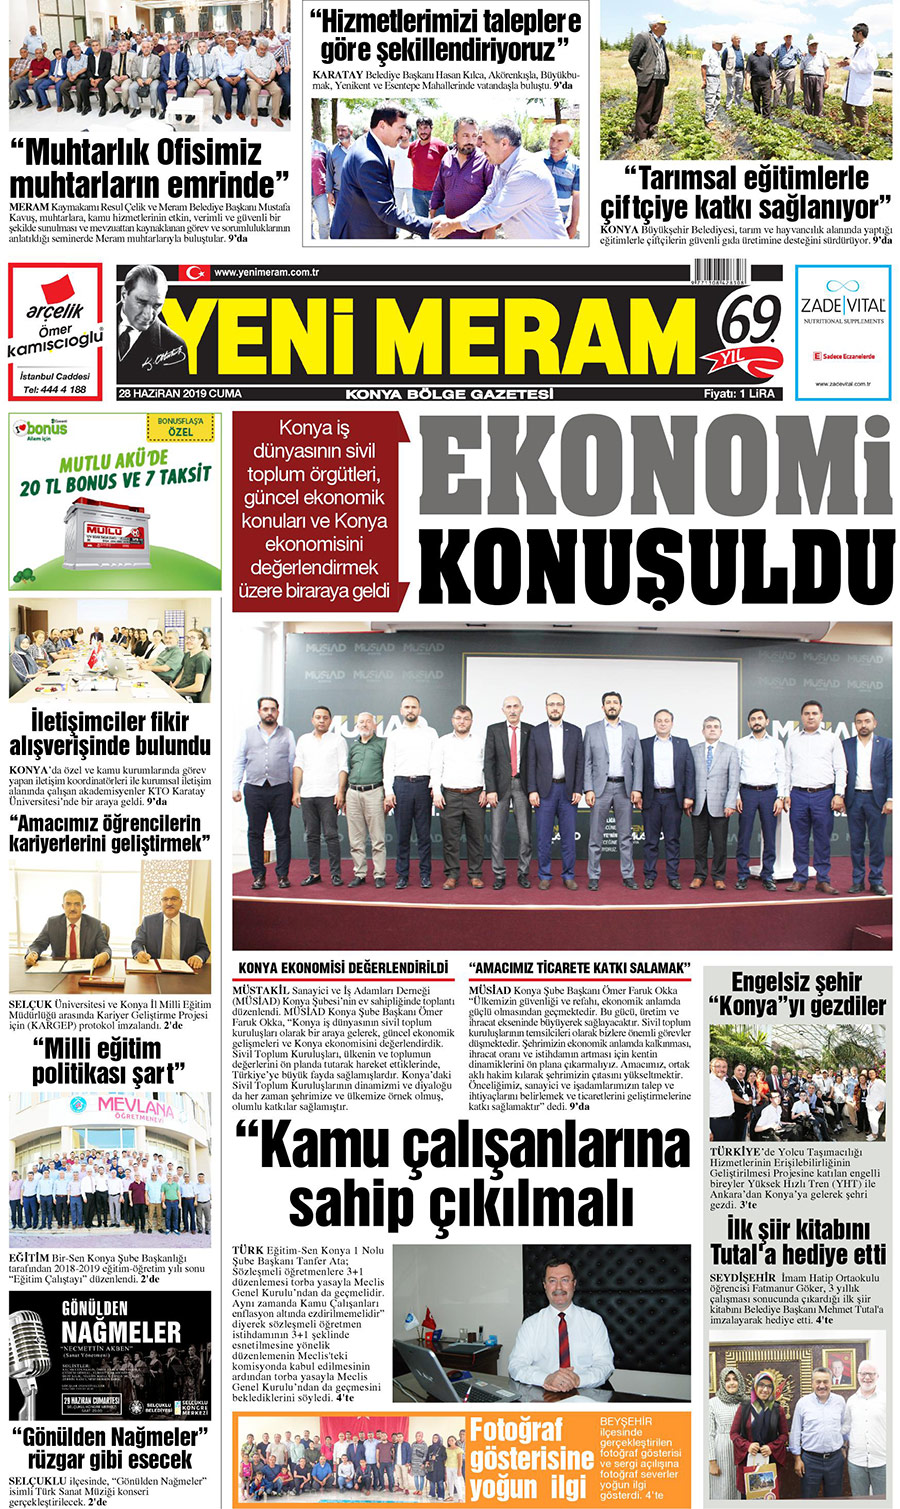 28 Haziran 2019 Yeni Meram Gazetesi